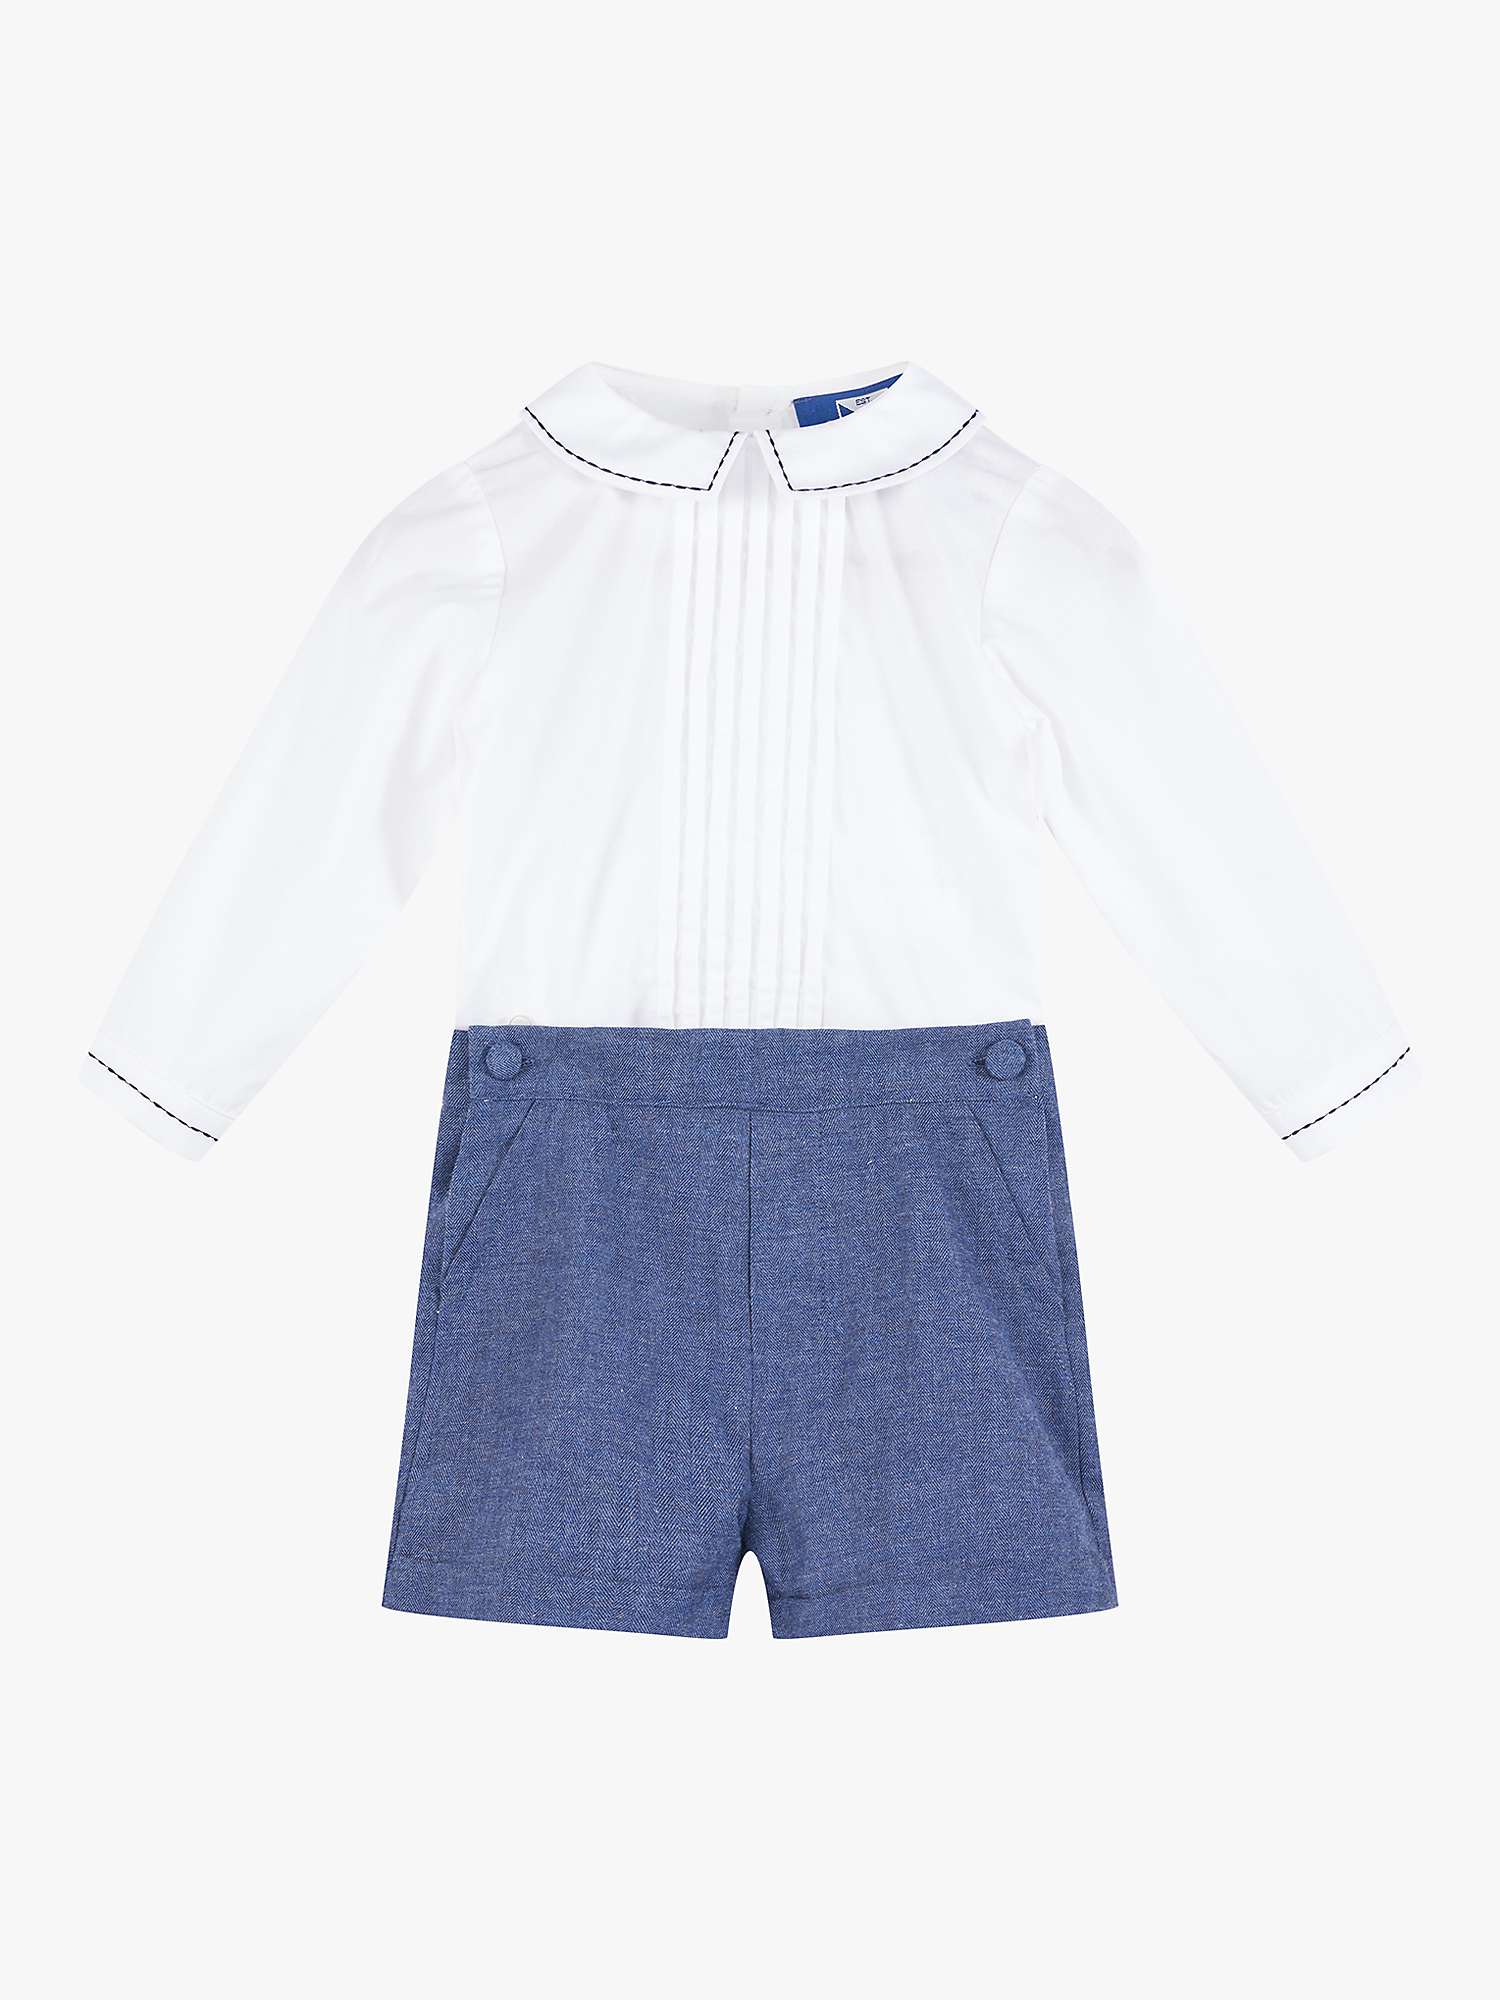 Buy Trotters Baby Rupert Shirt & Shorts Set Online at johnlewis.com